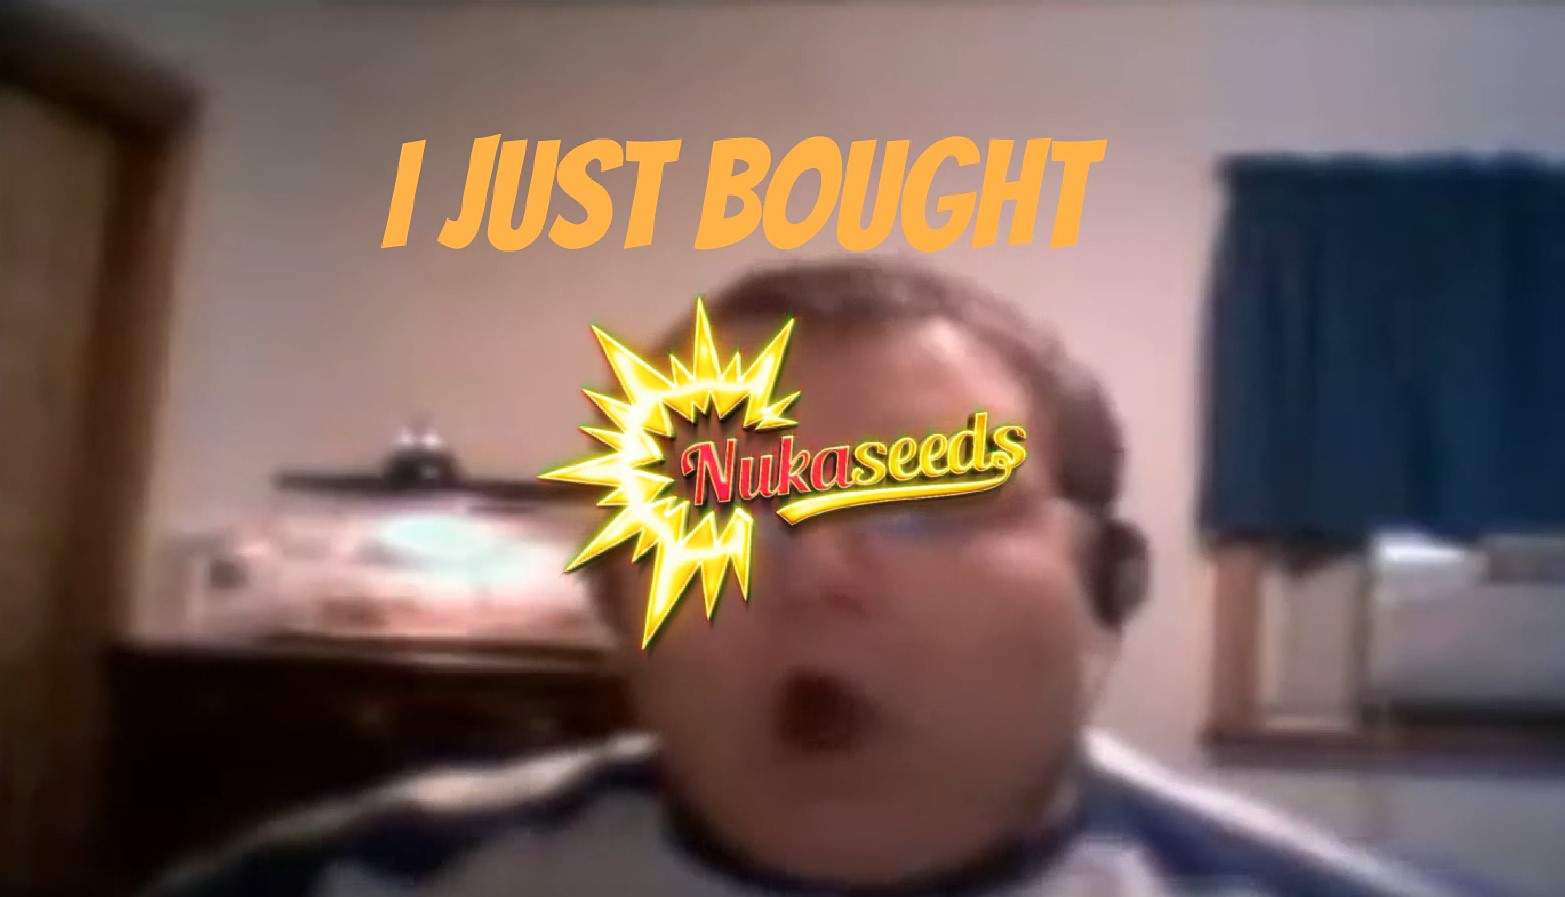 I just bought nuka seeds, meme video